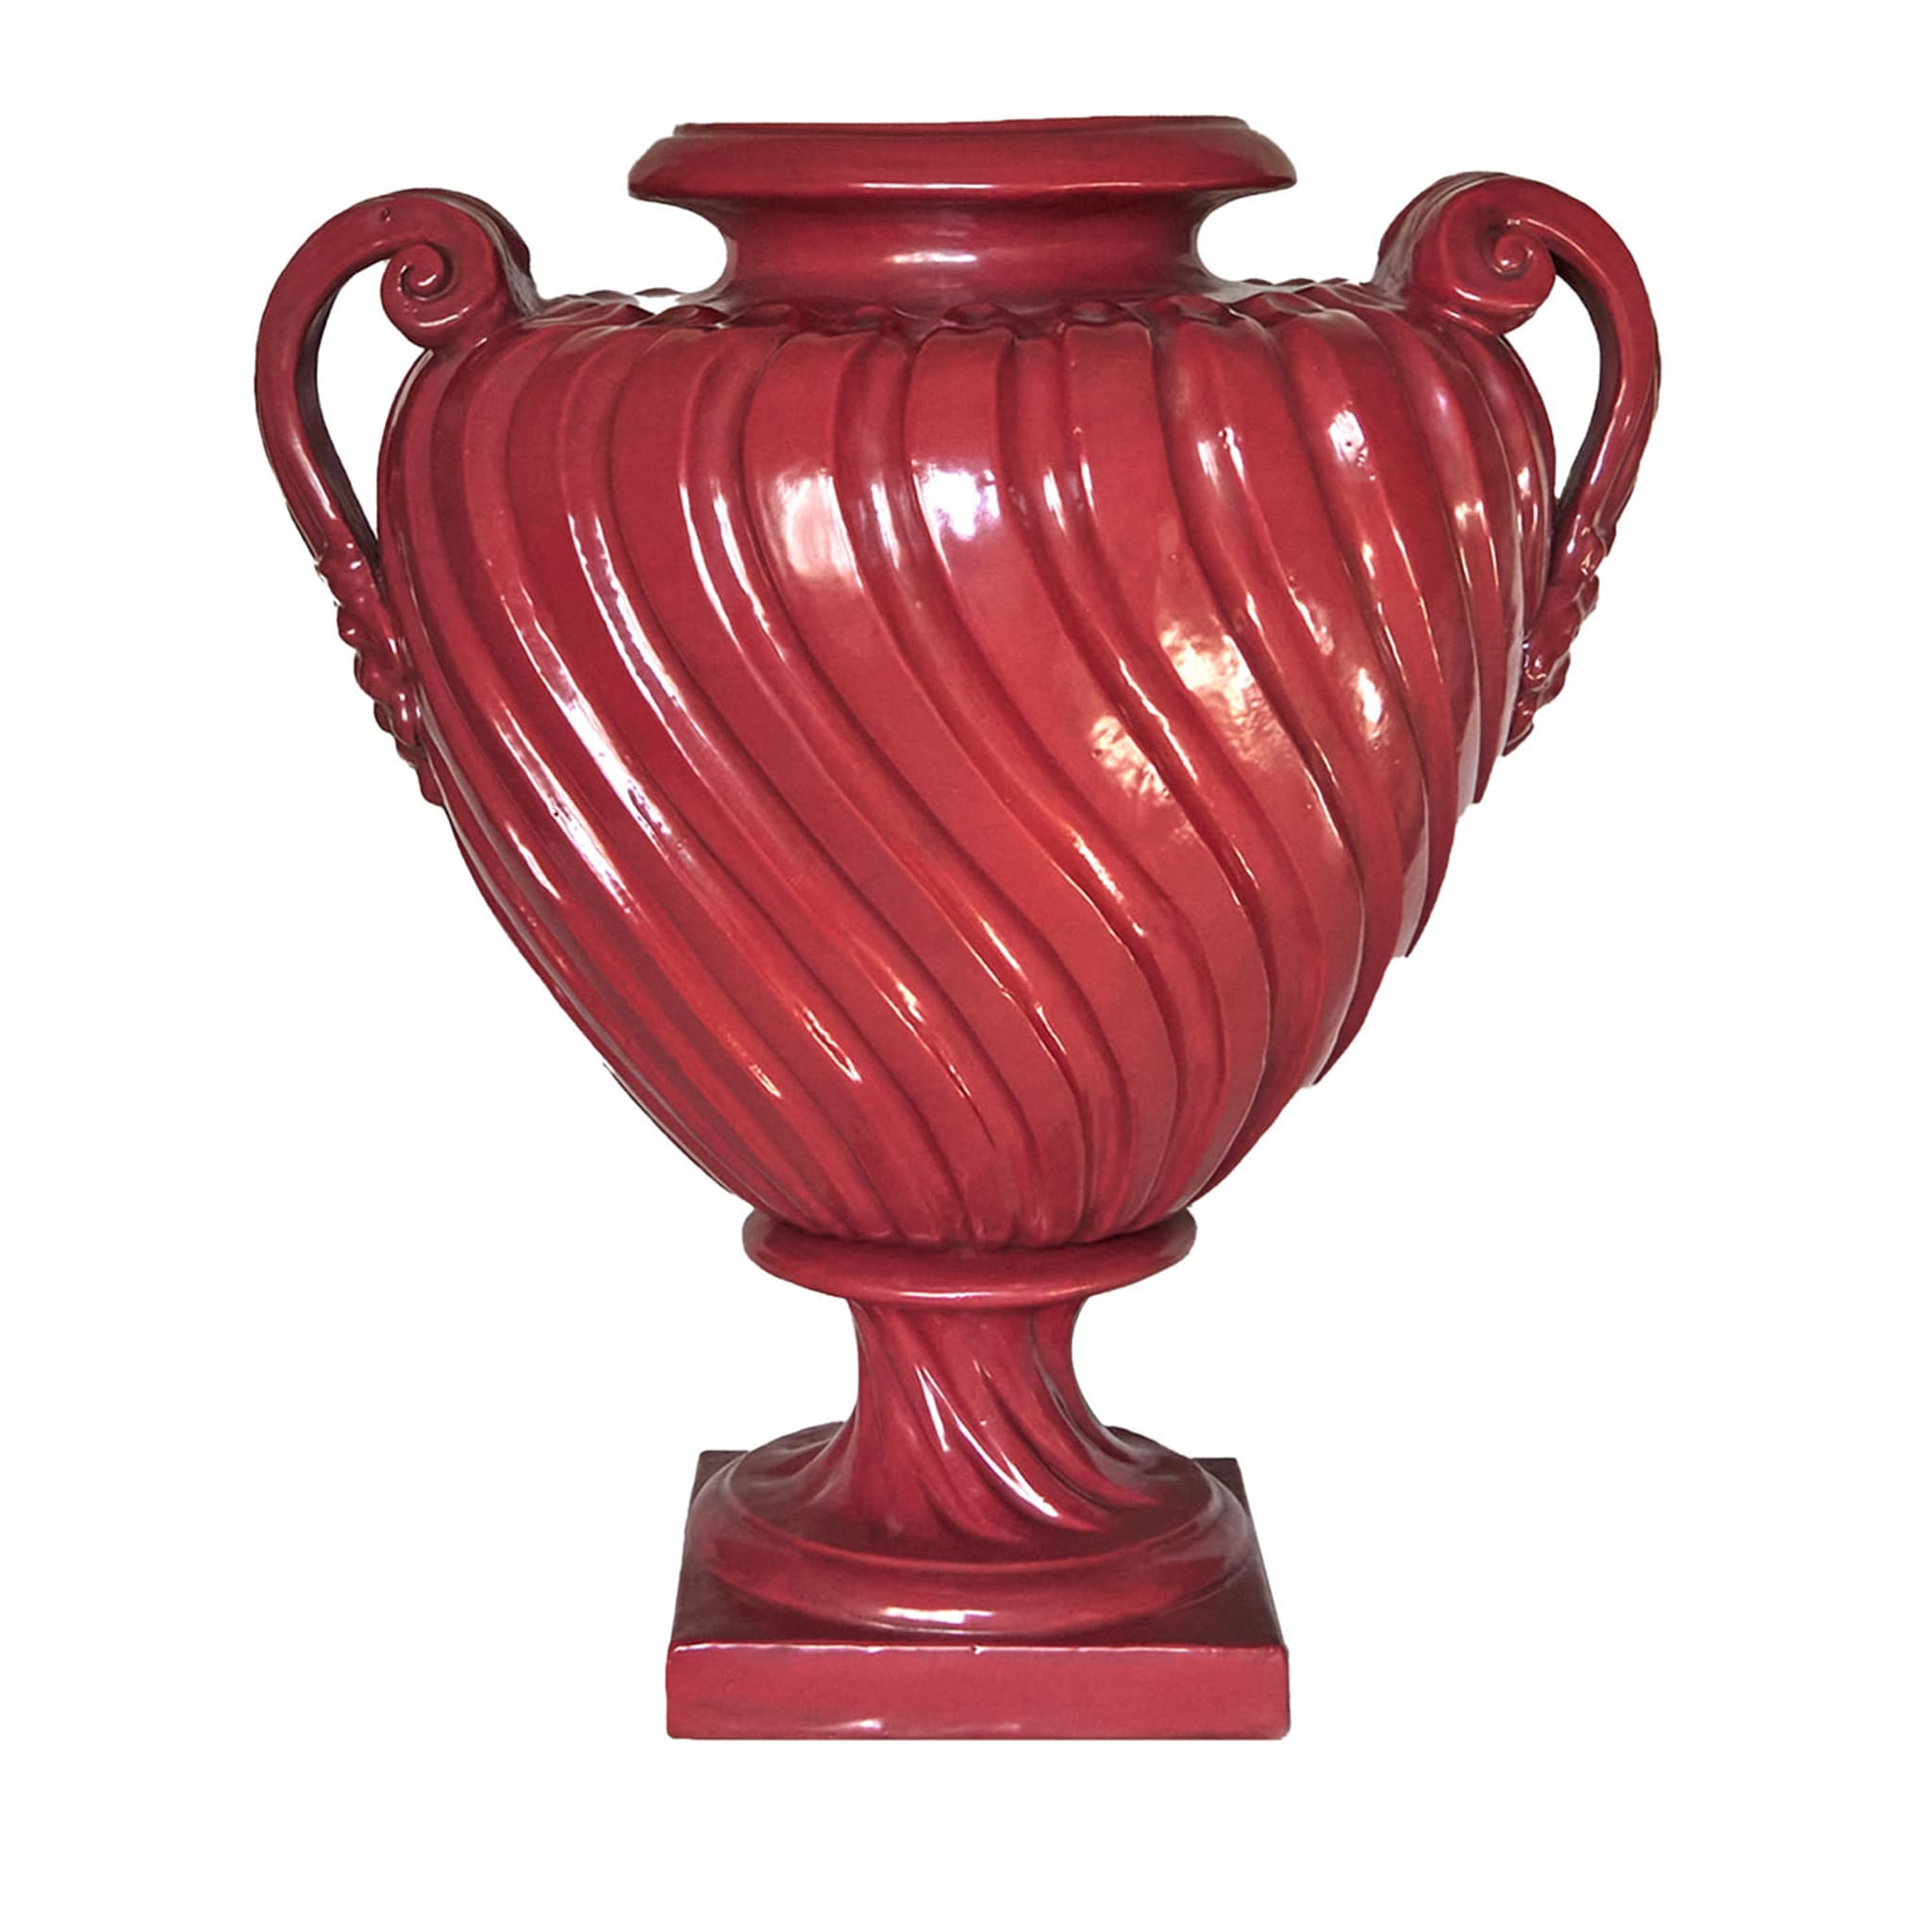 Ercole Rote Vase - Hauptansicht